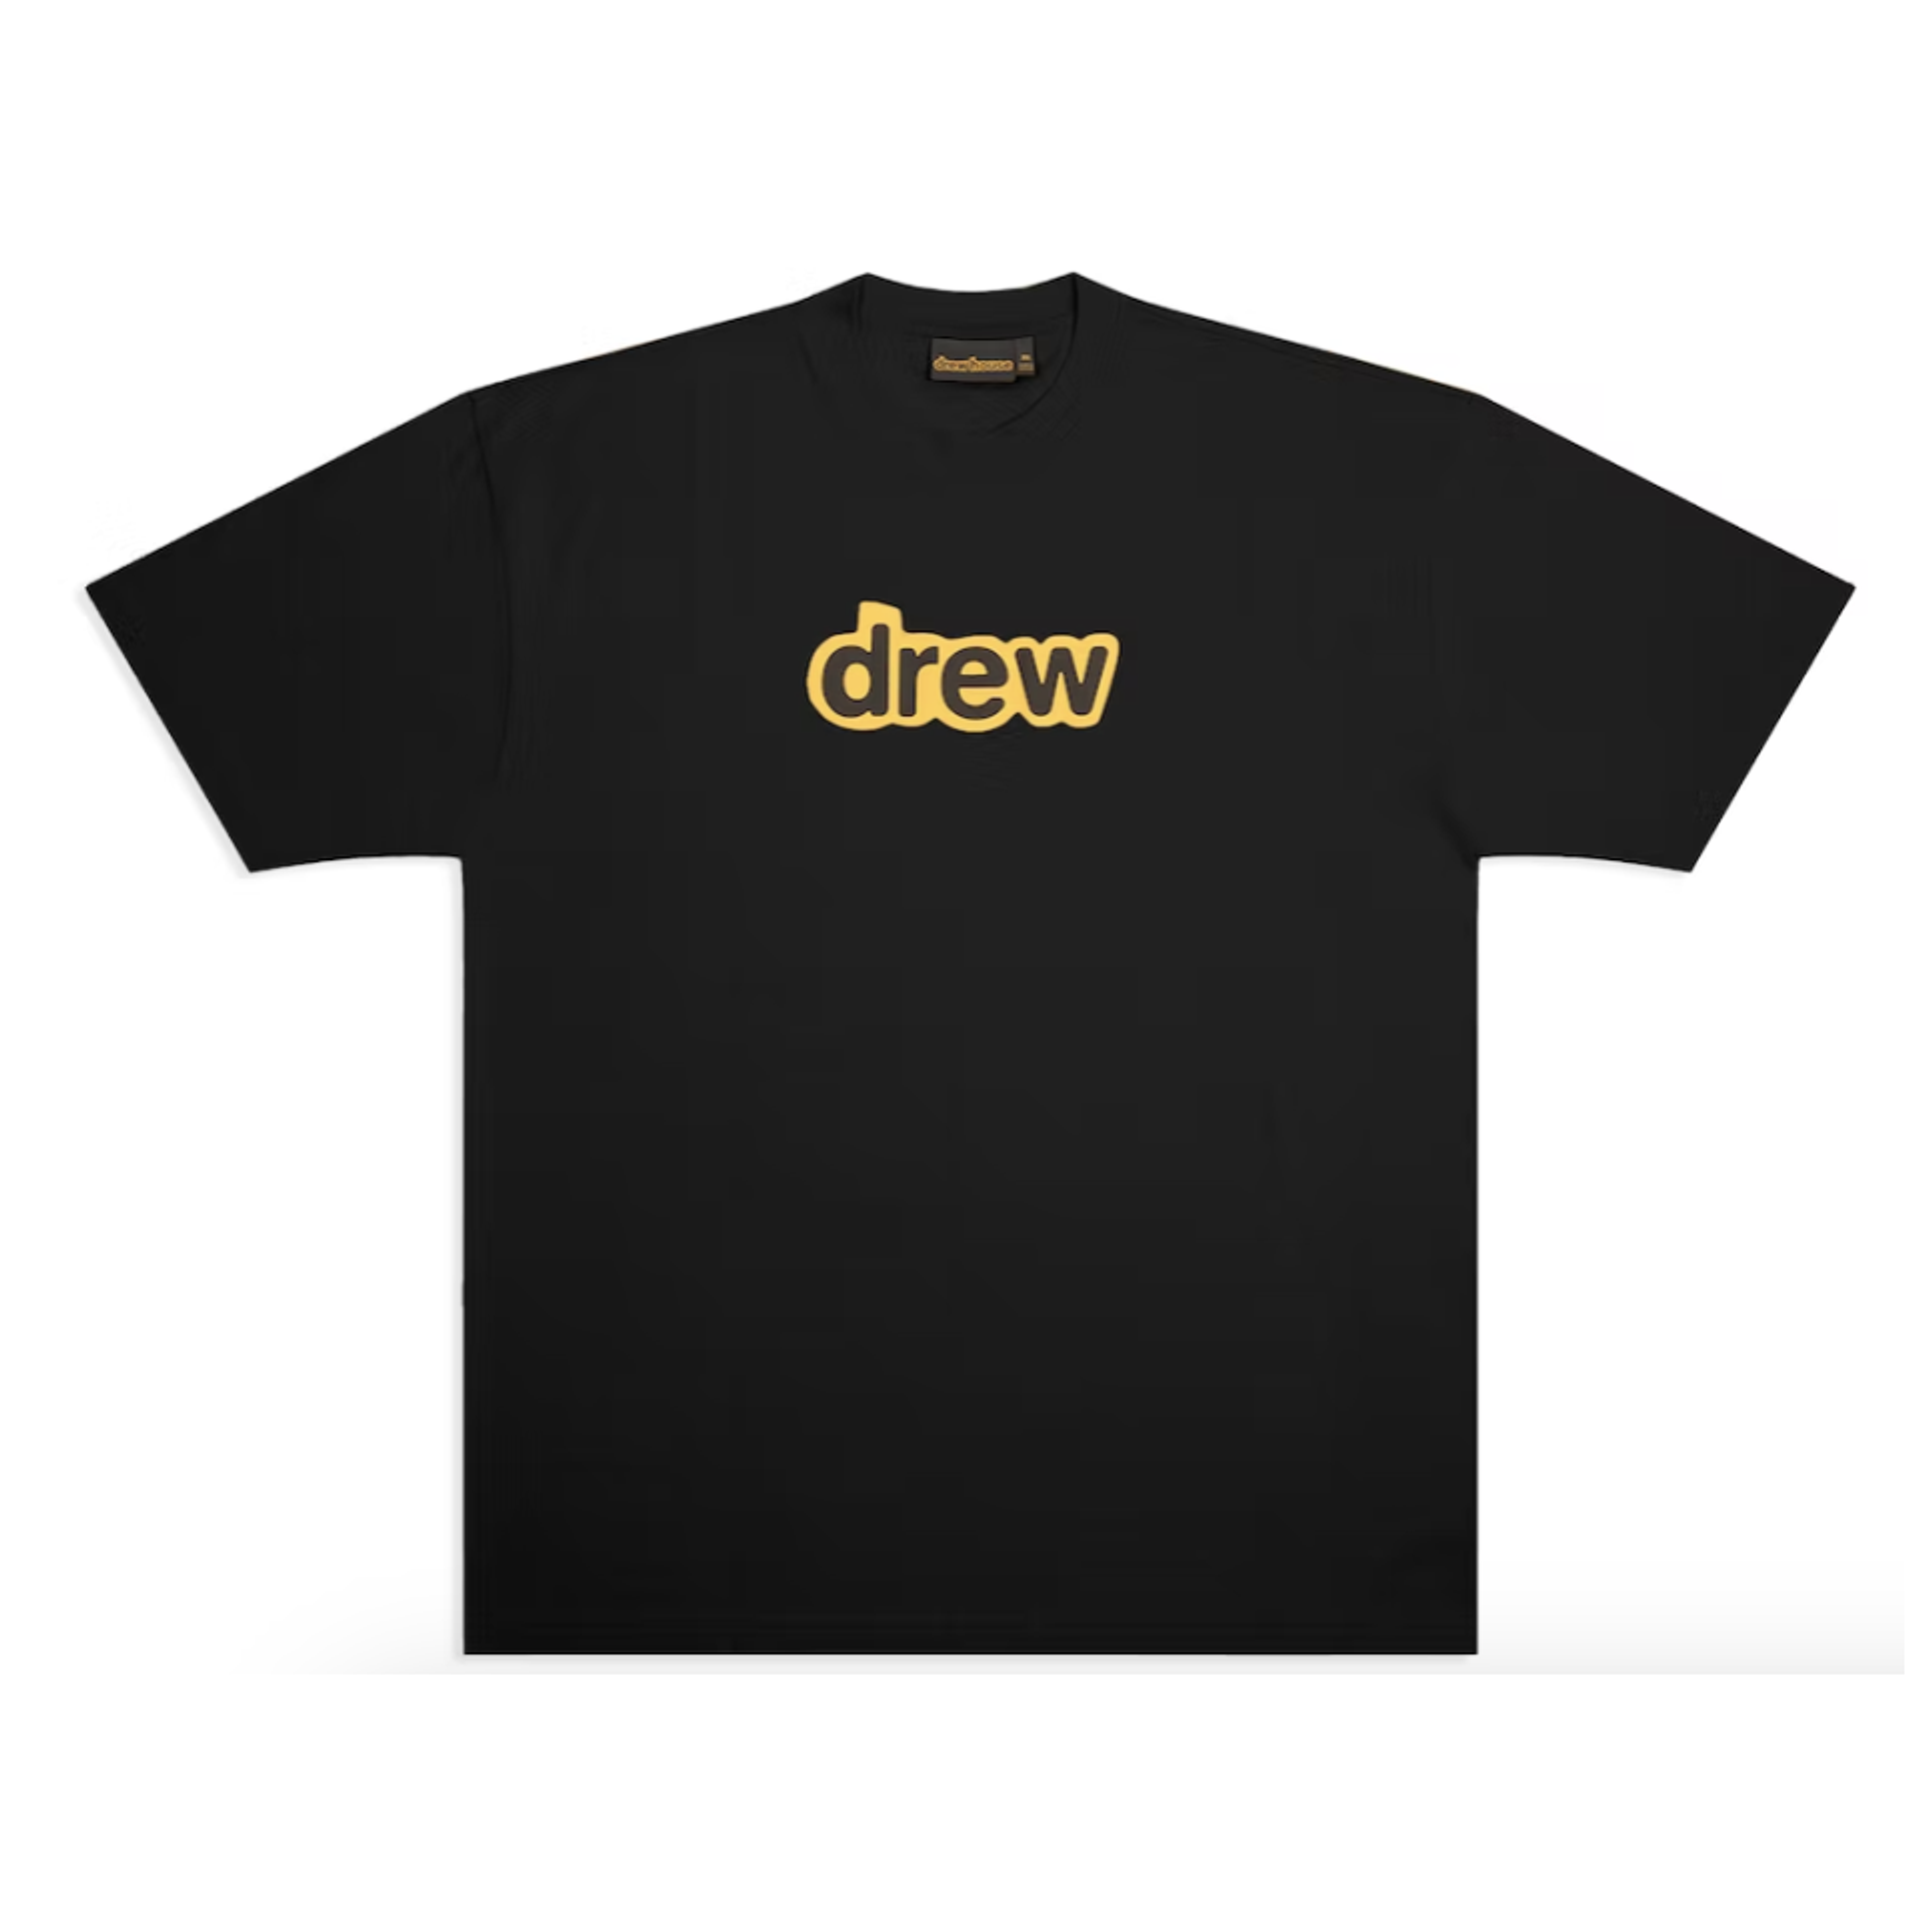 Drew House Secret T-shirt 'Black' - DH HJ2121 SEBK | Ox Street